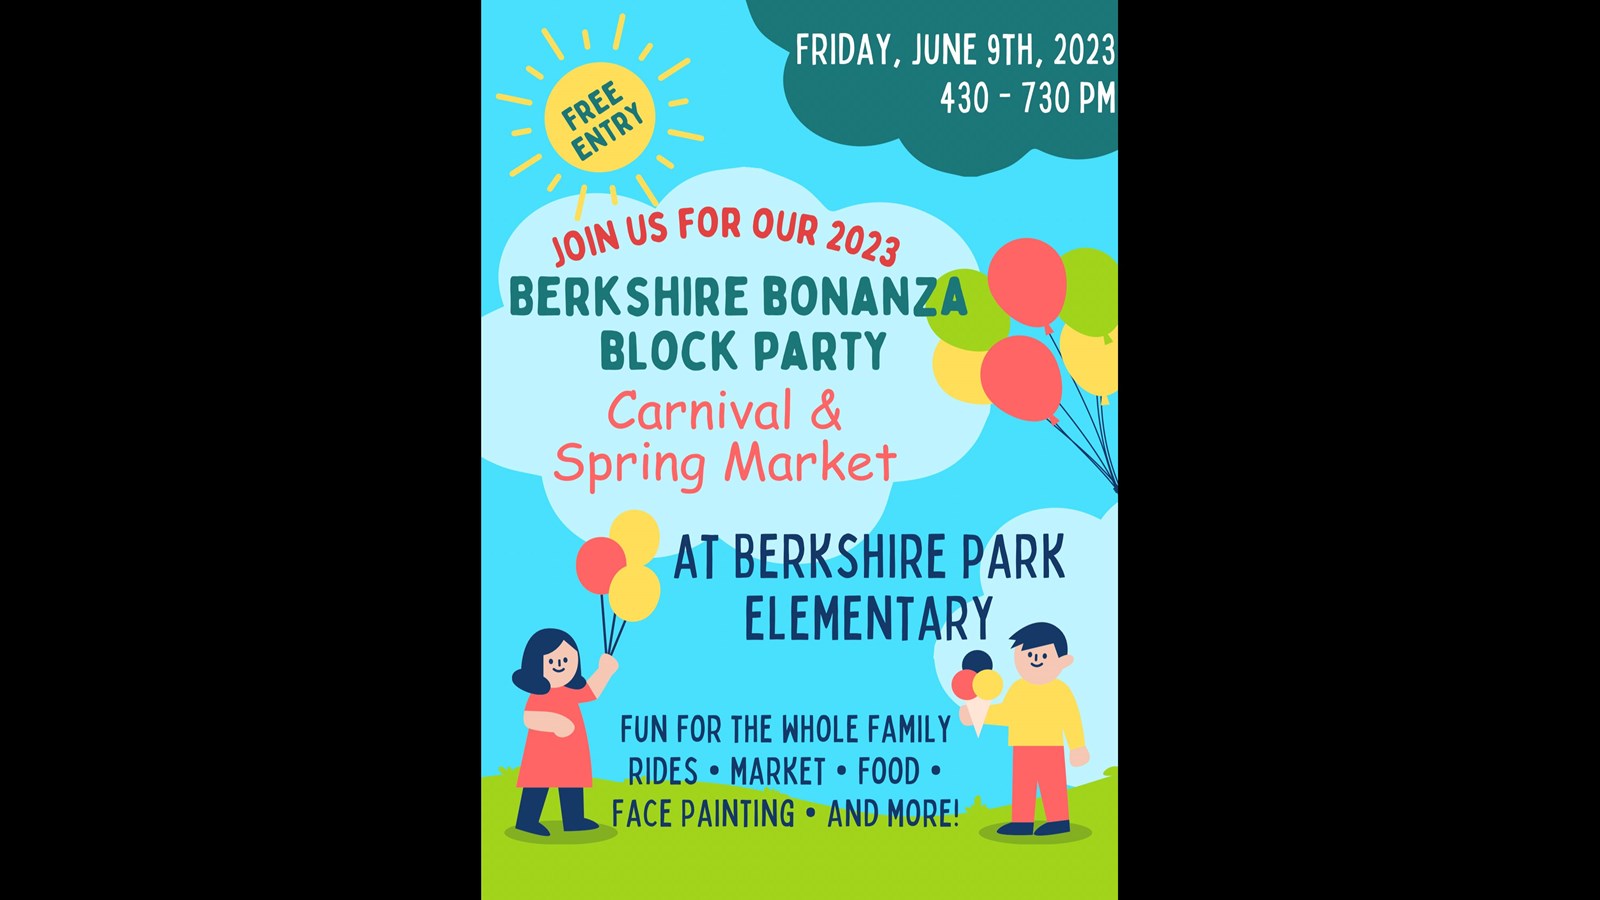 Berkshire Bonanza Block Party - Friday, June 9th, 2023 from 430-730pm